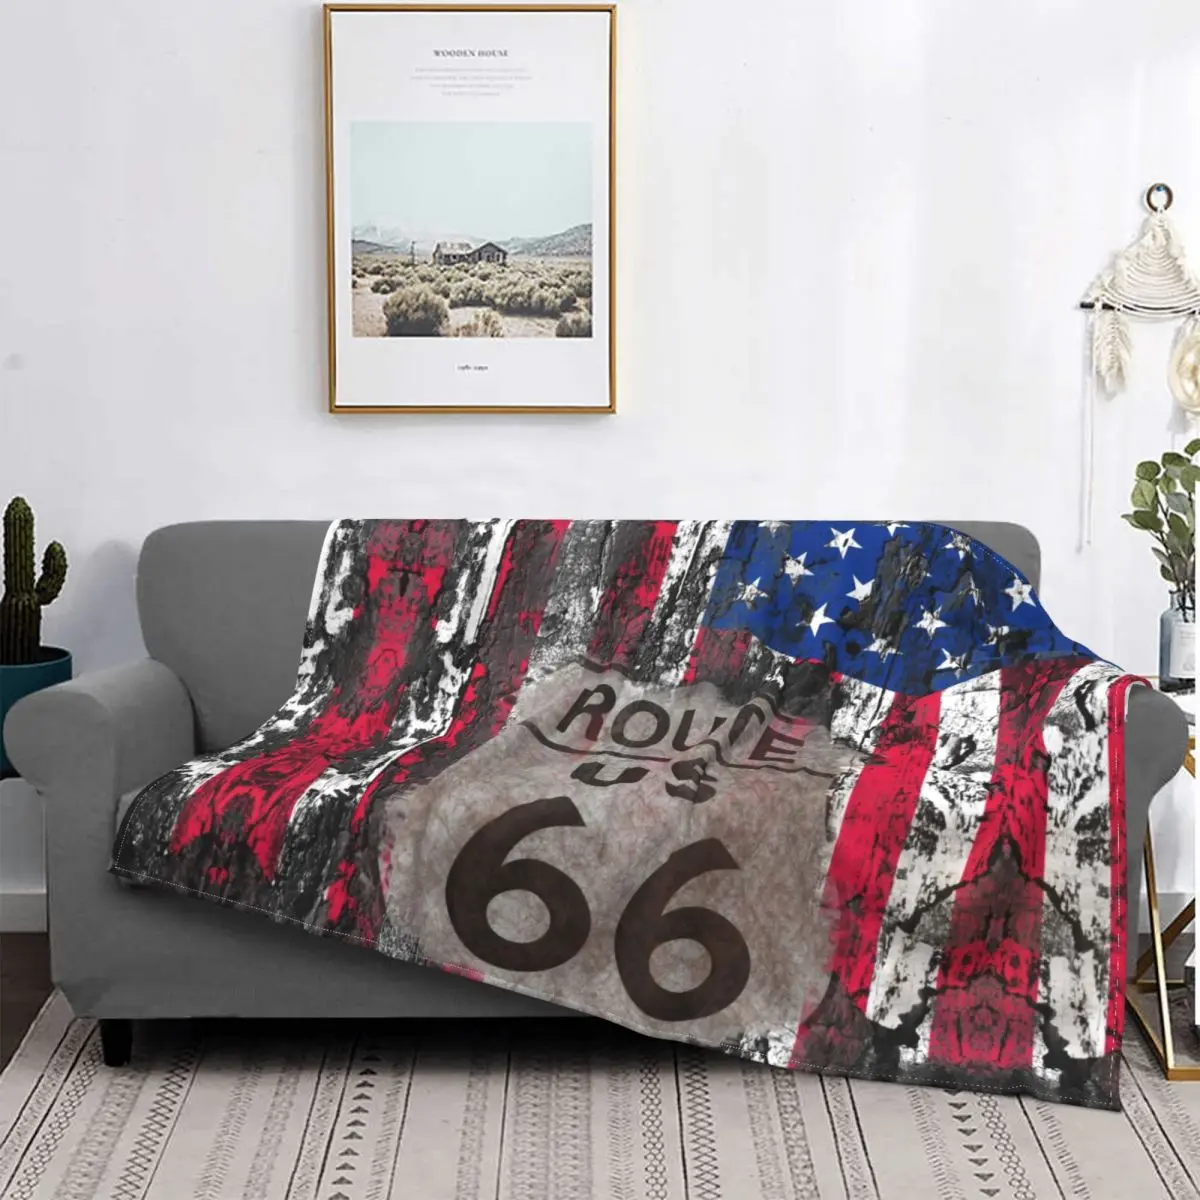 

US 66 Biker Blanket Soft Flannel Fleece Warm Route 66 America Highway Motorcycle Throw Blanket for Home Bedroom Couch Bedspreads